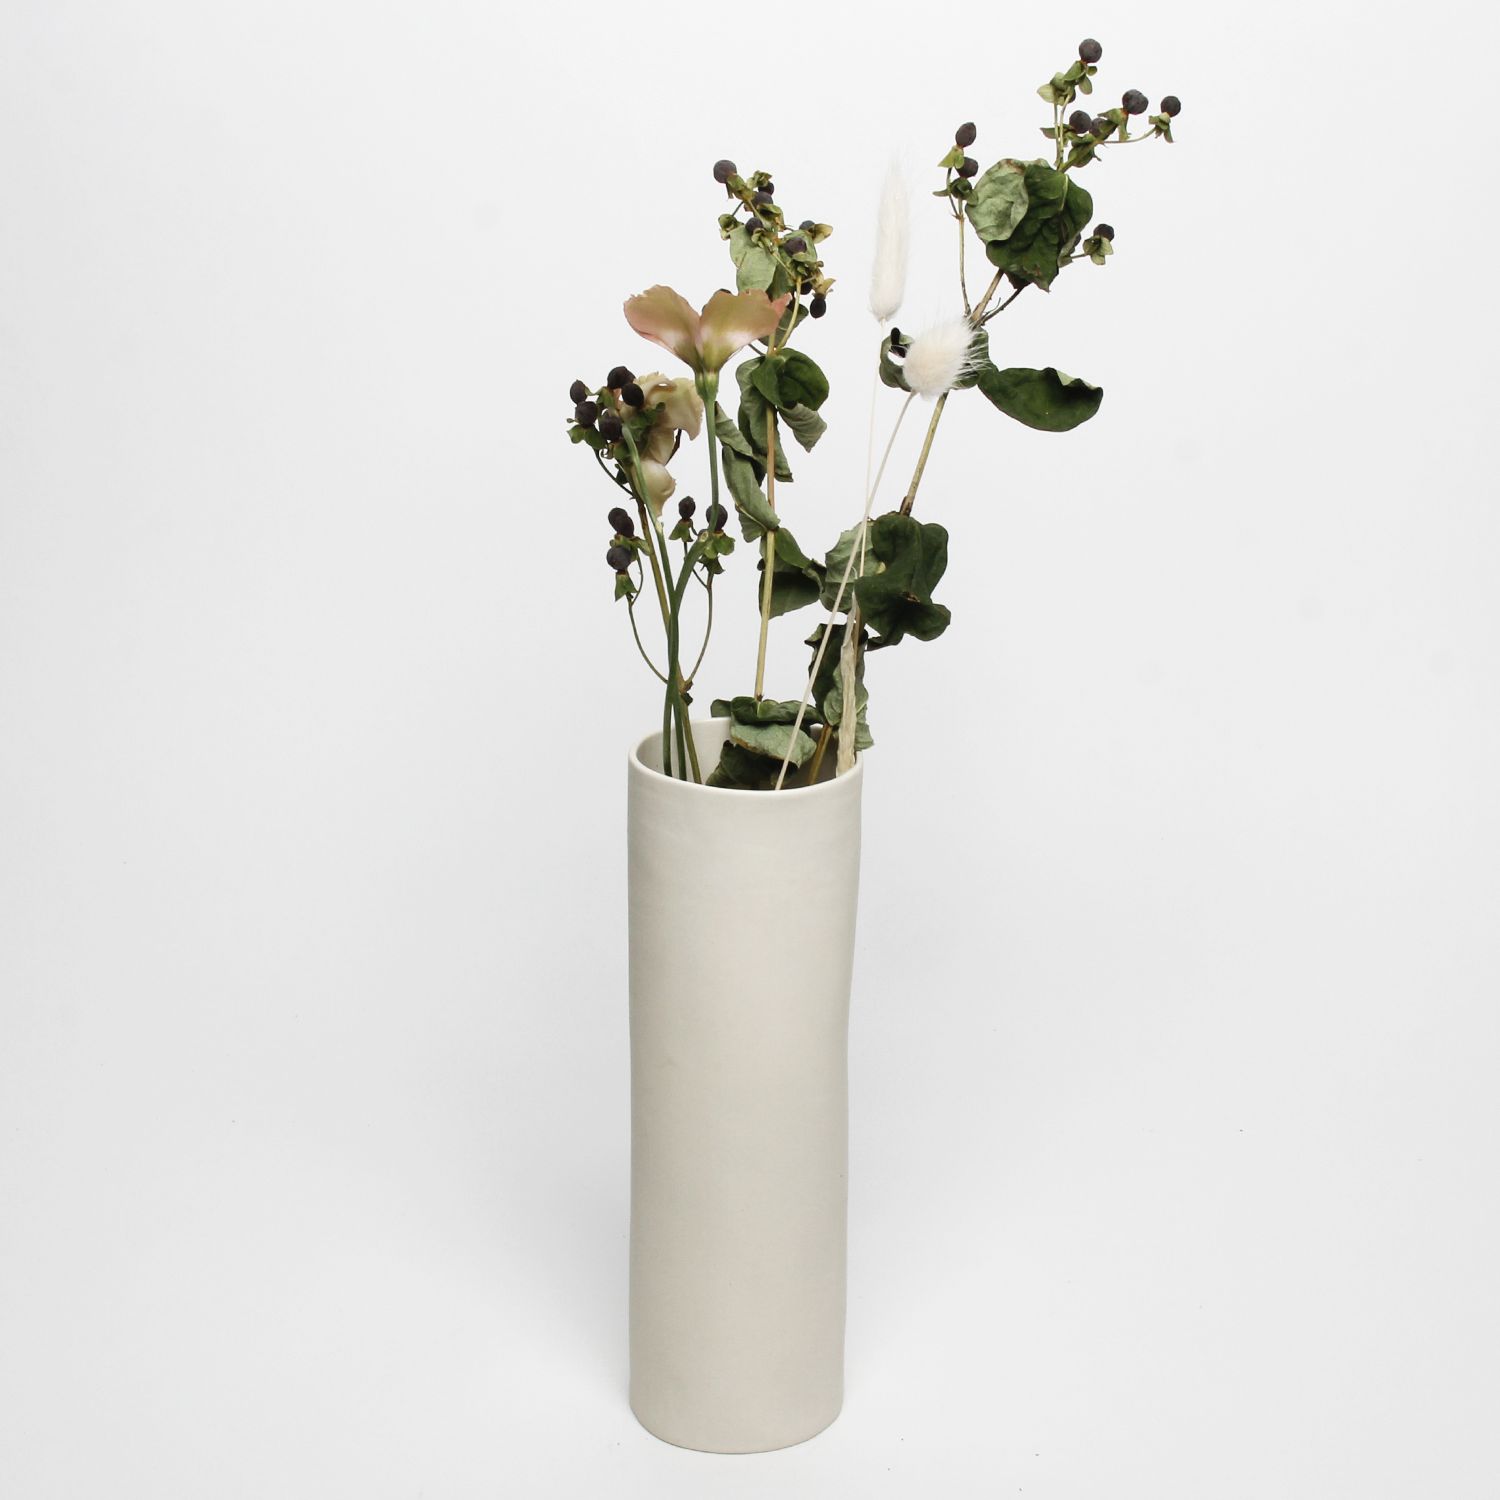 Queenie Kun Xu: Slab Vase Product Image 2 of 2